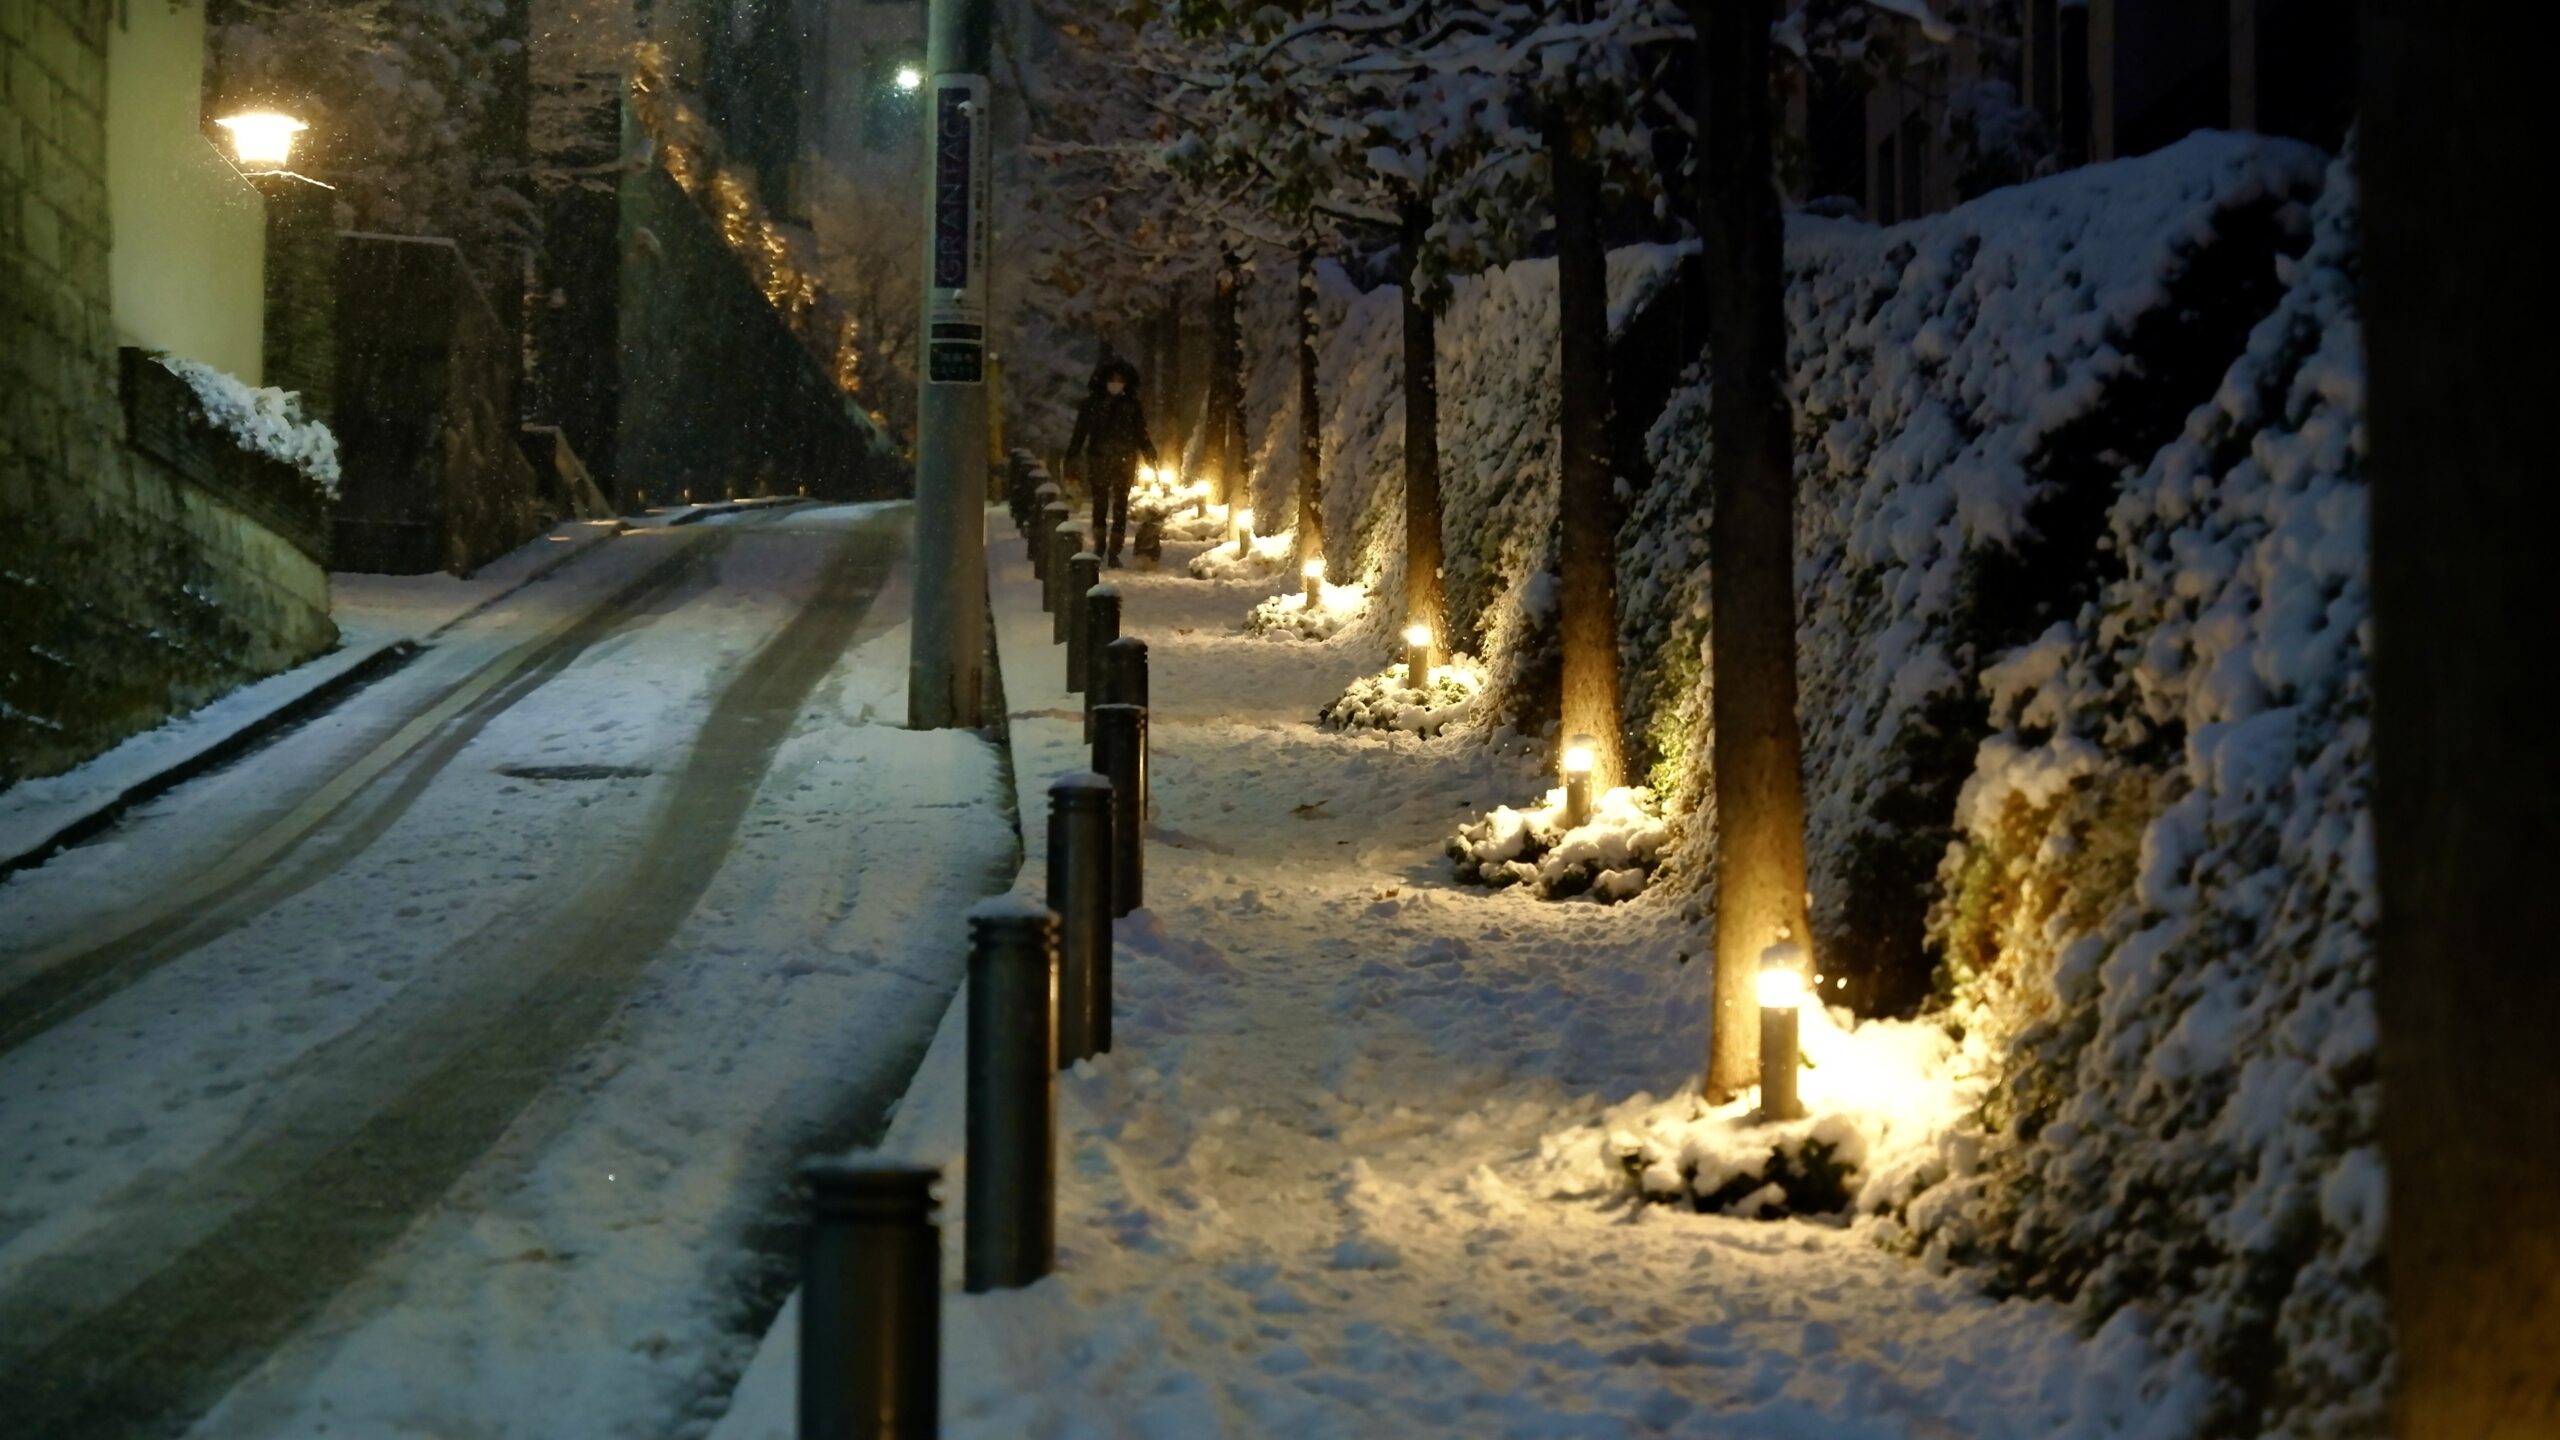 Aokizaka Hill snowy night